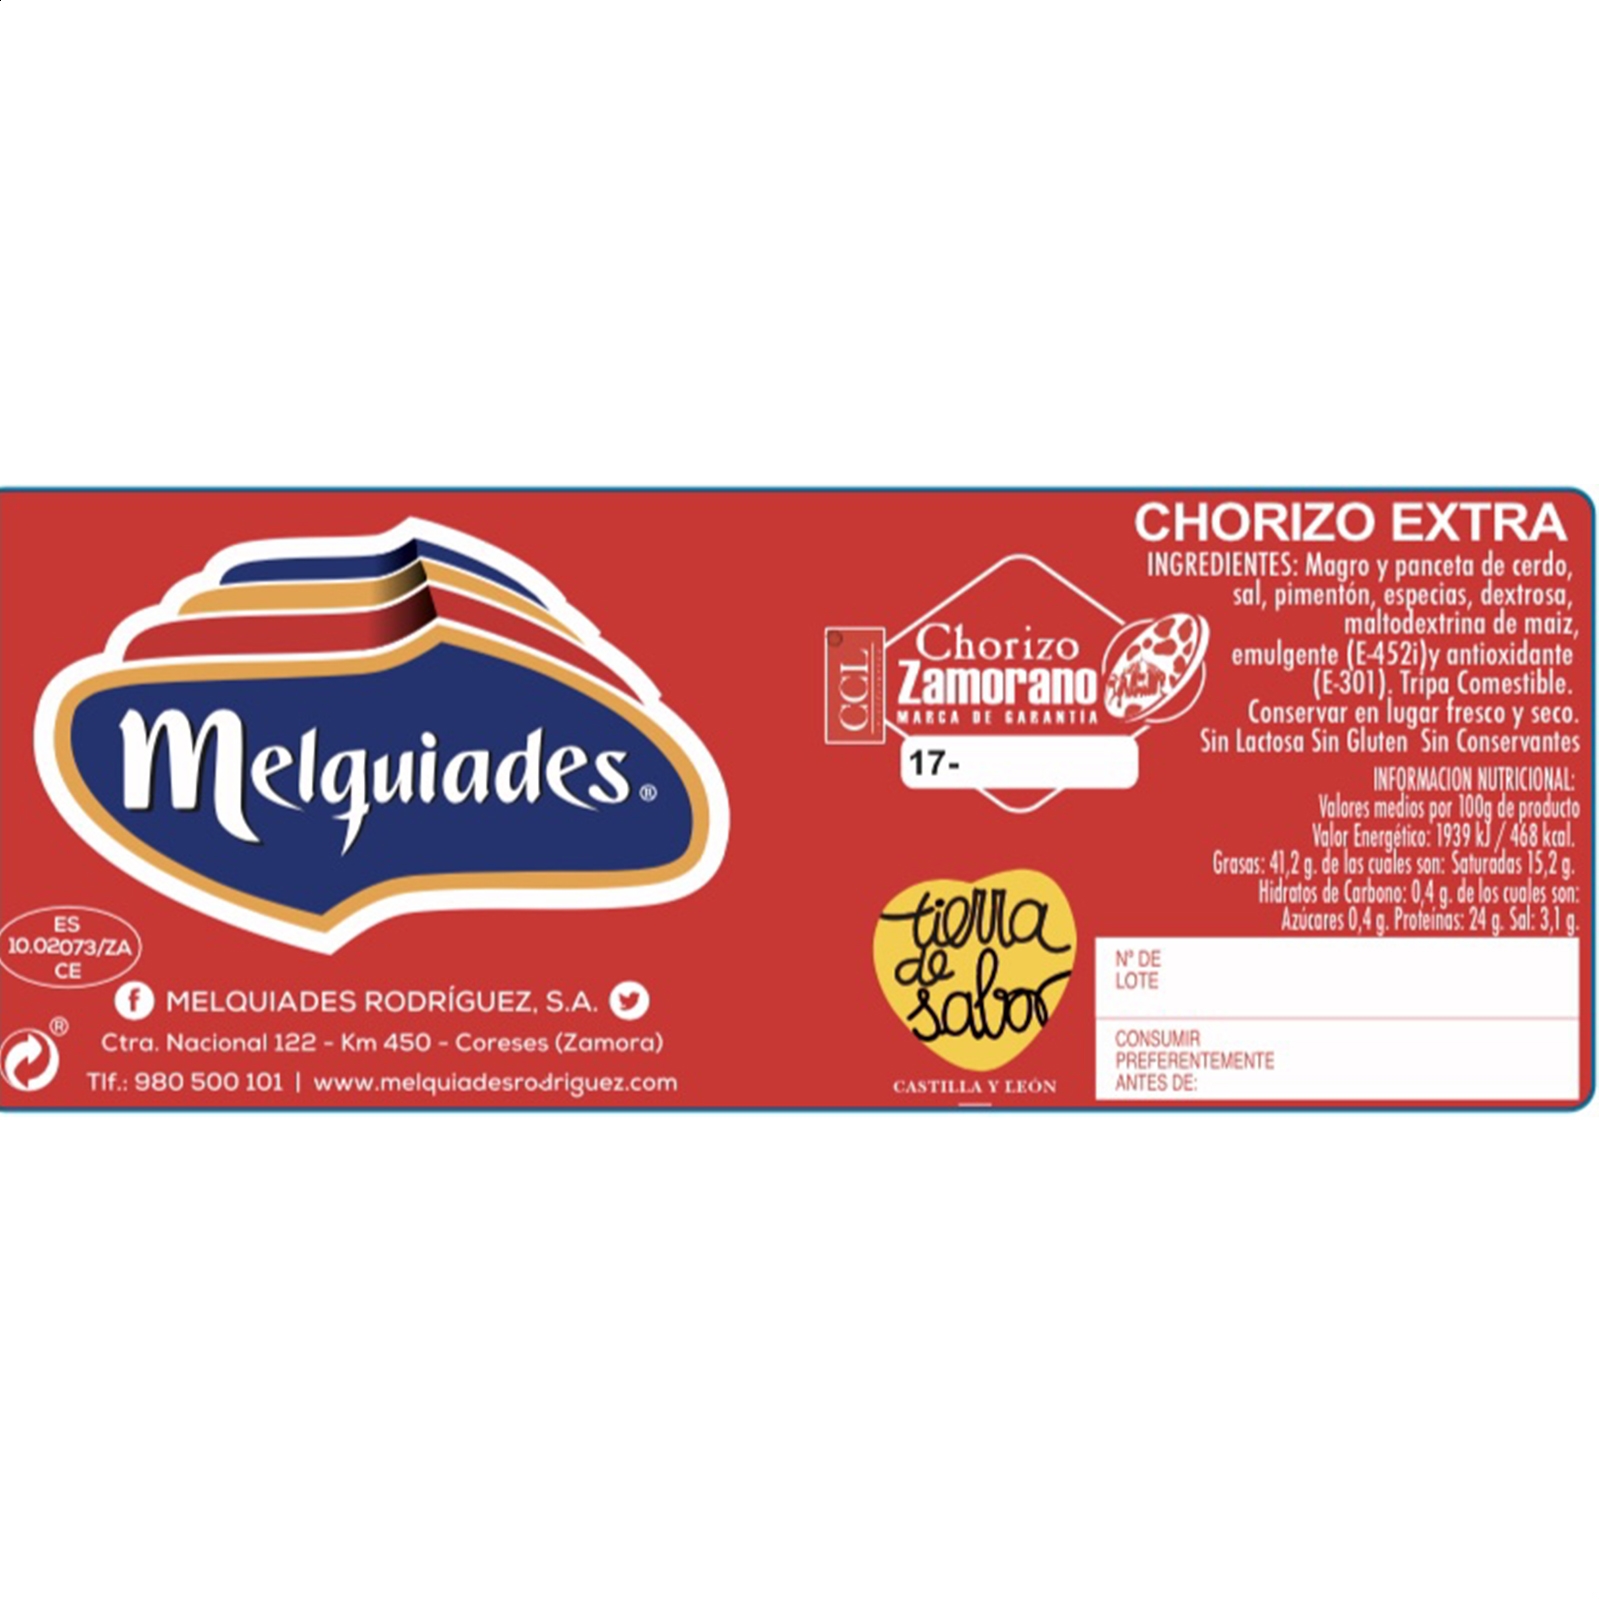 Melquiades - Chorizo Zamorano dulce extra en sarta 500g, 5uds